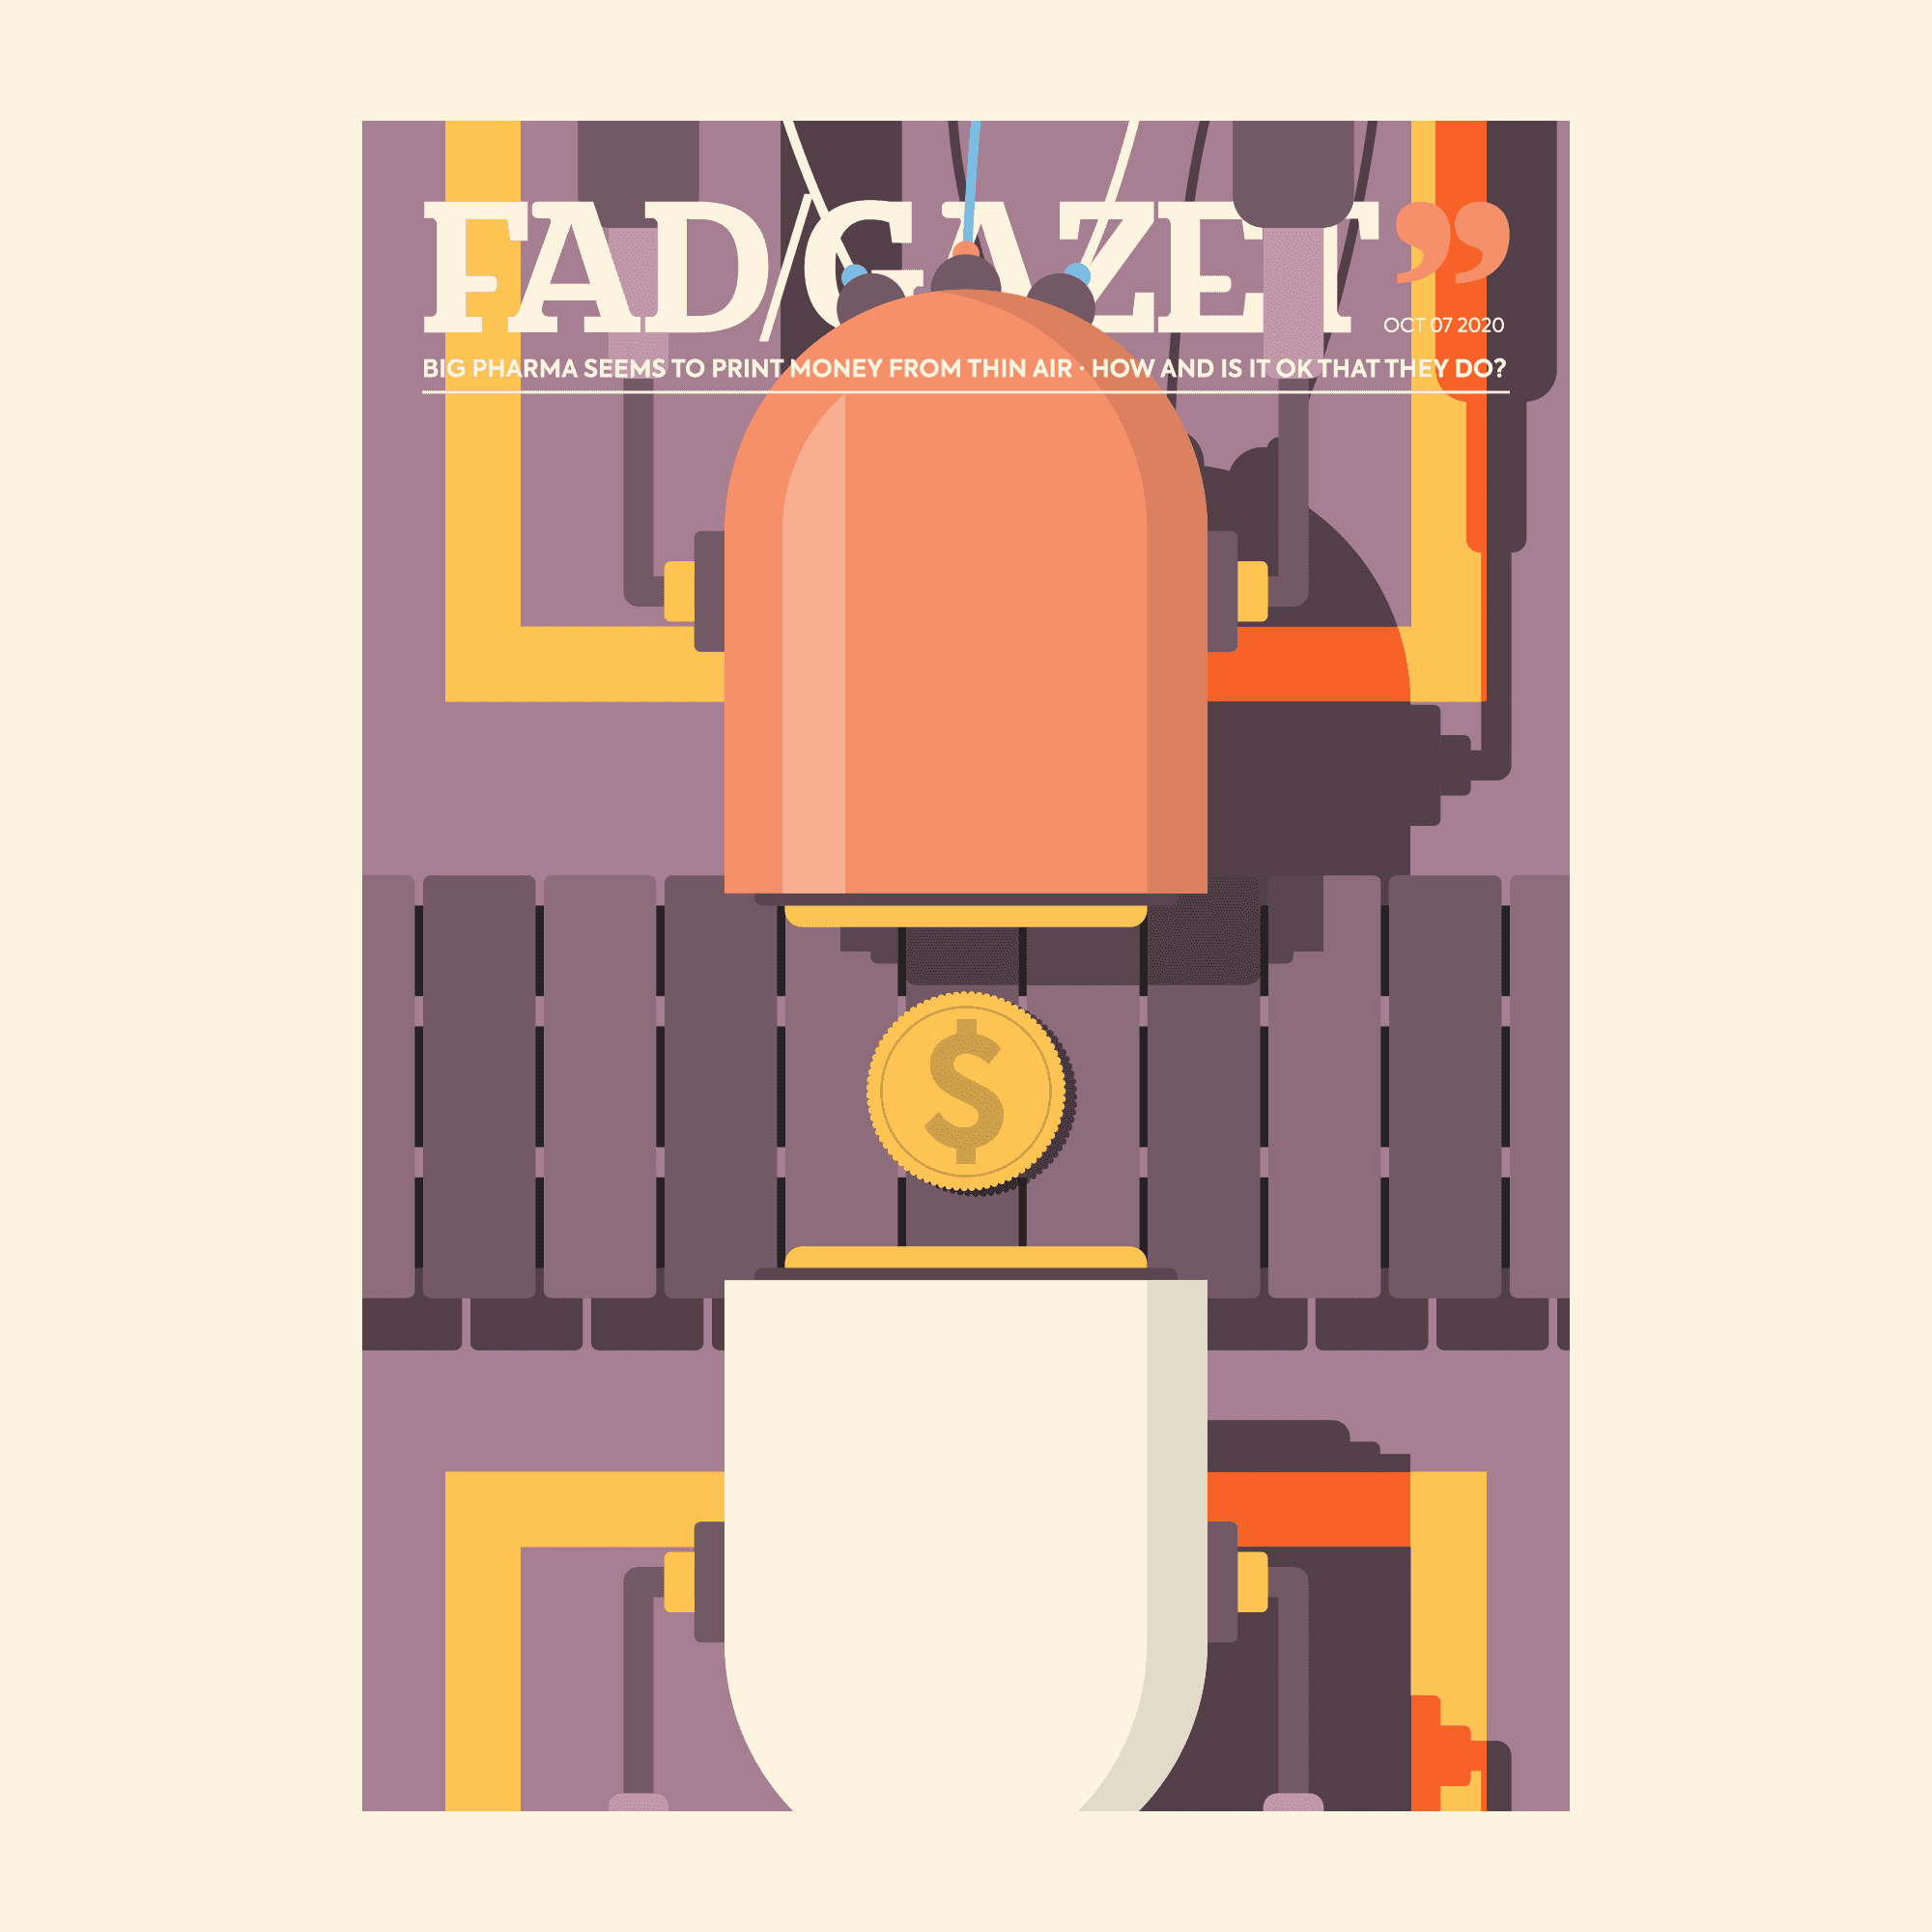 FAD/GAZET" cover OCT 07 2020